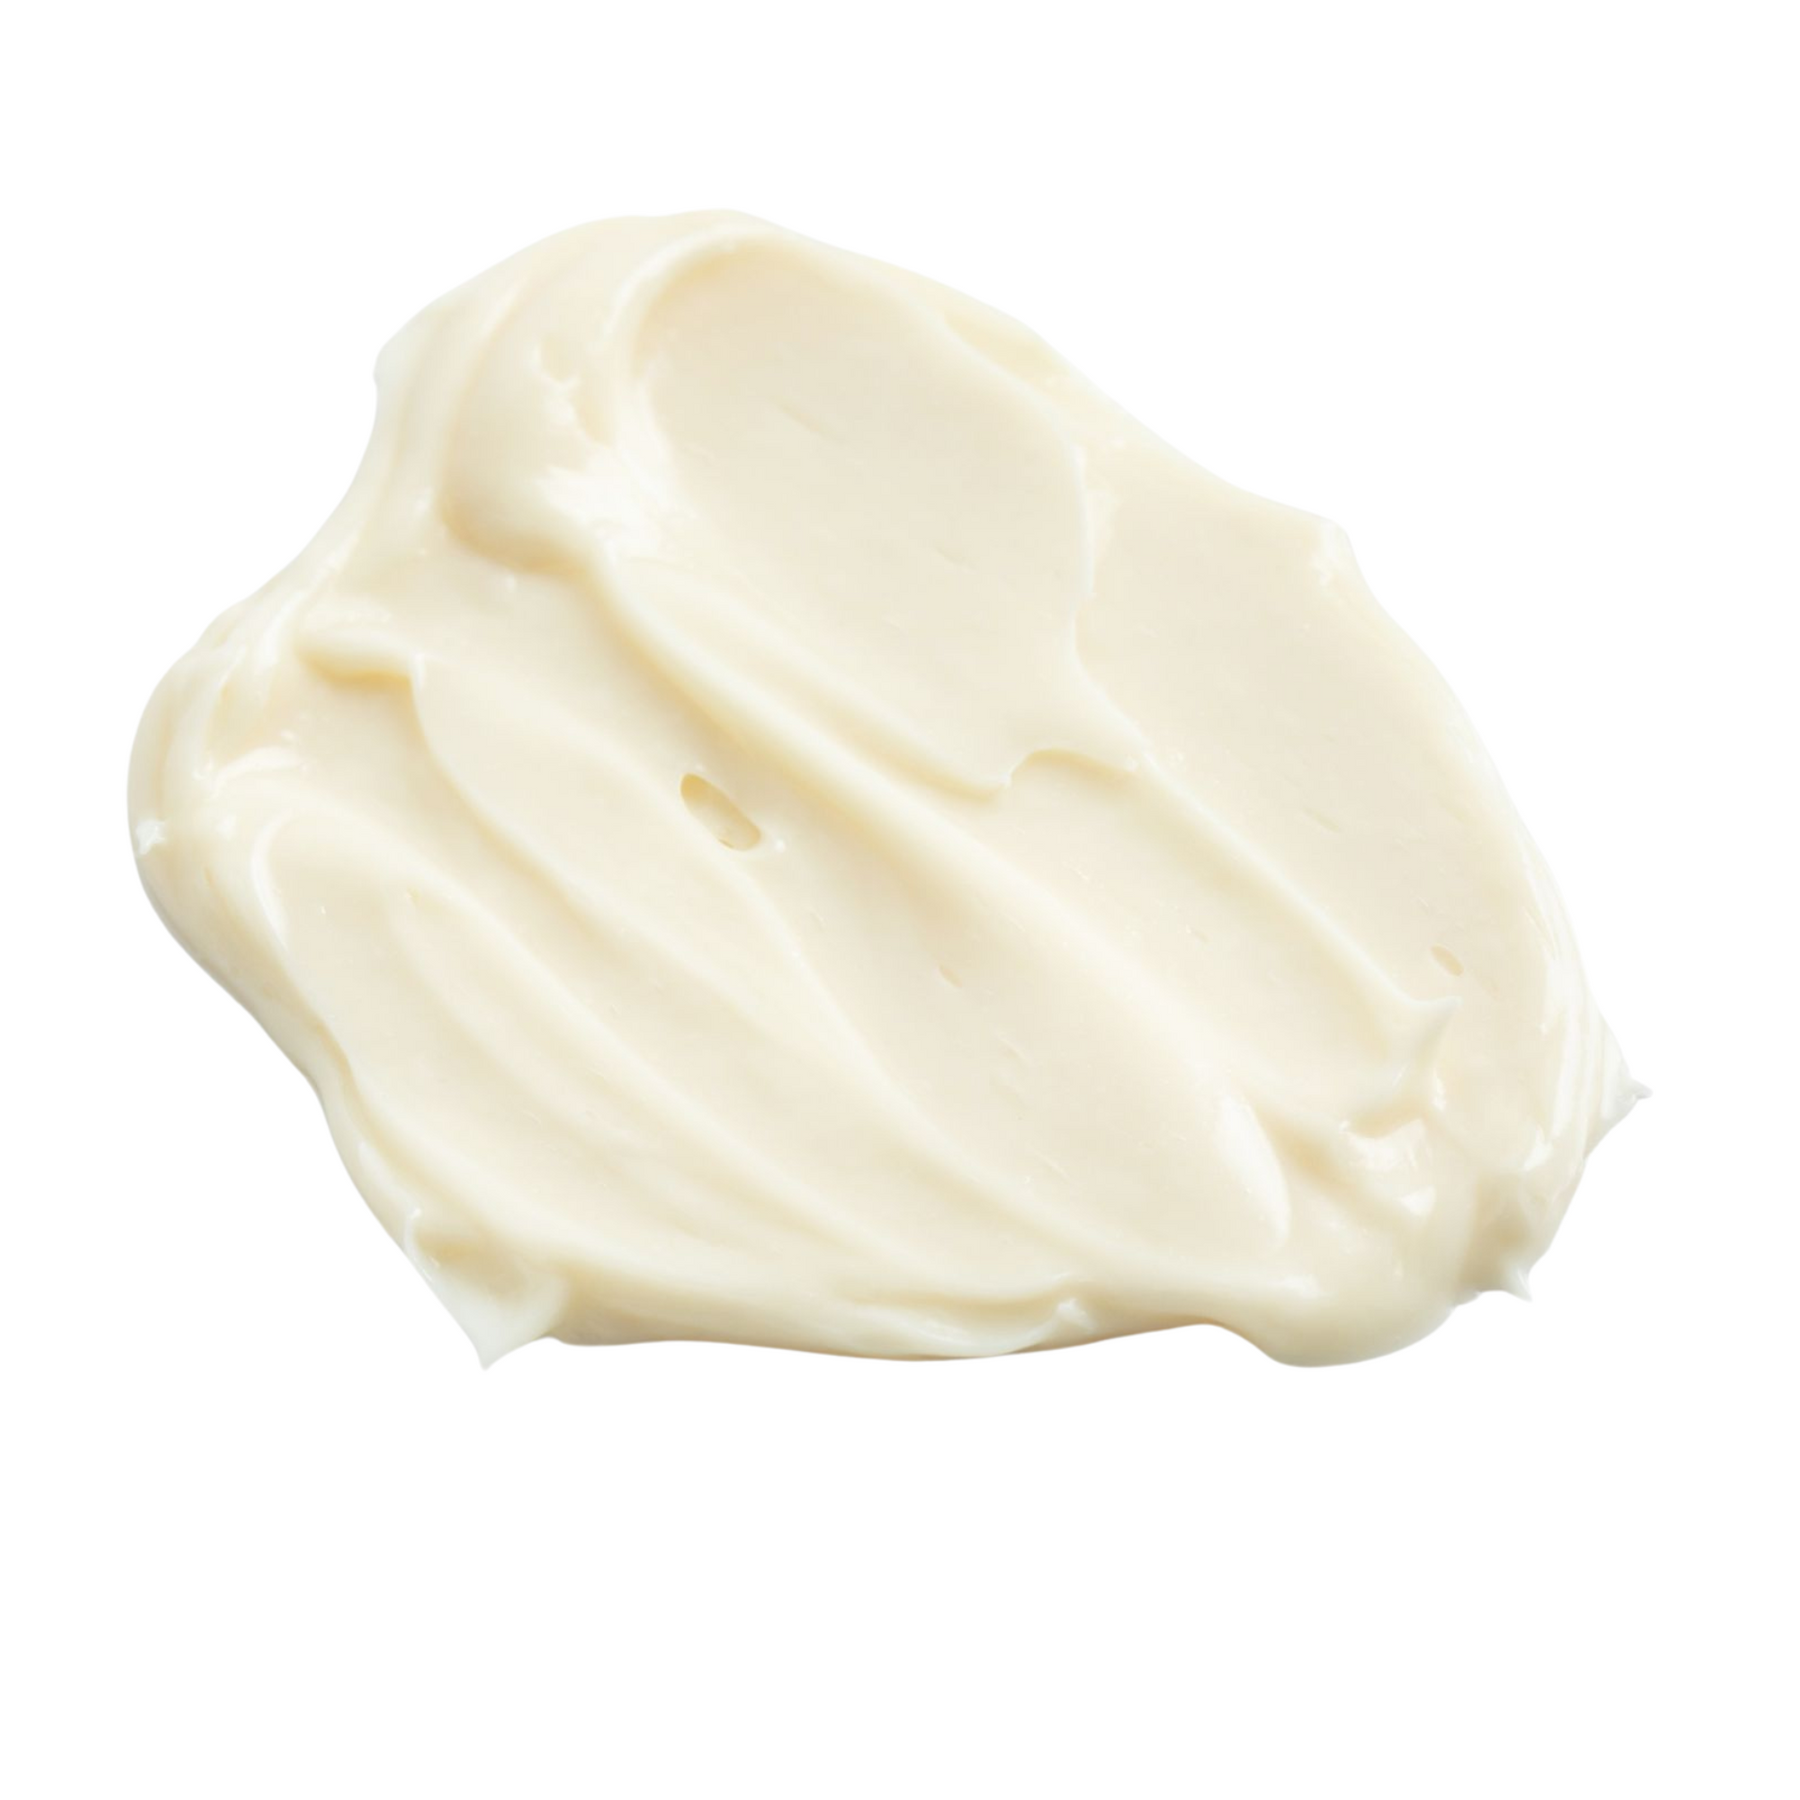 Plasma Restore GLO – Volufiline™ Cream